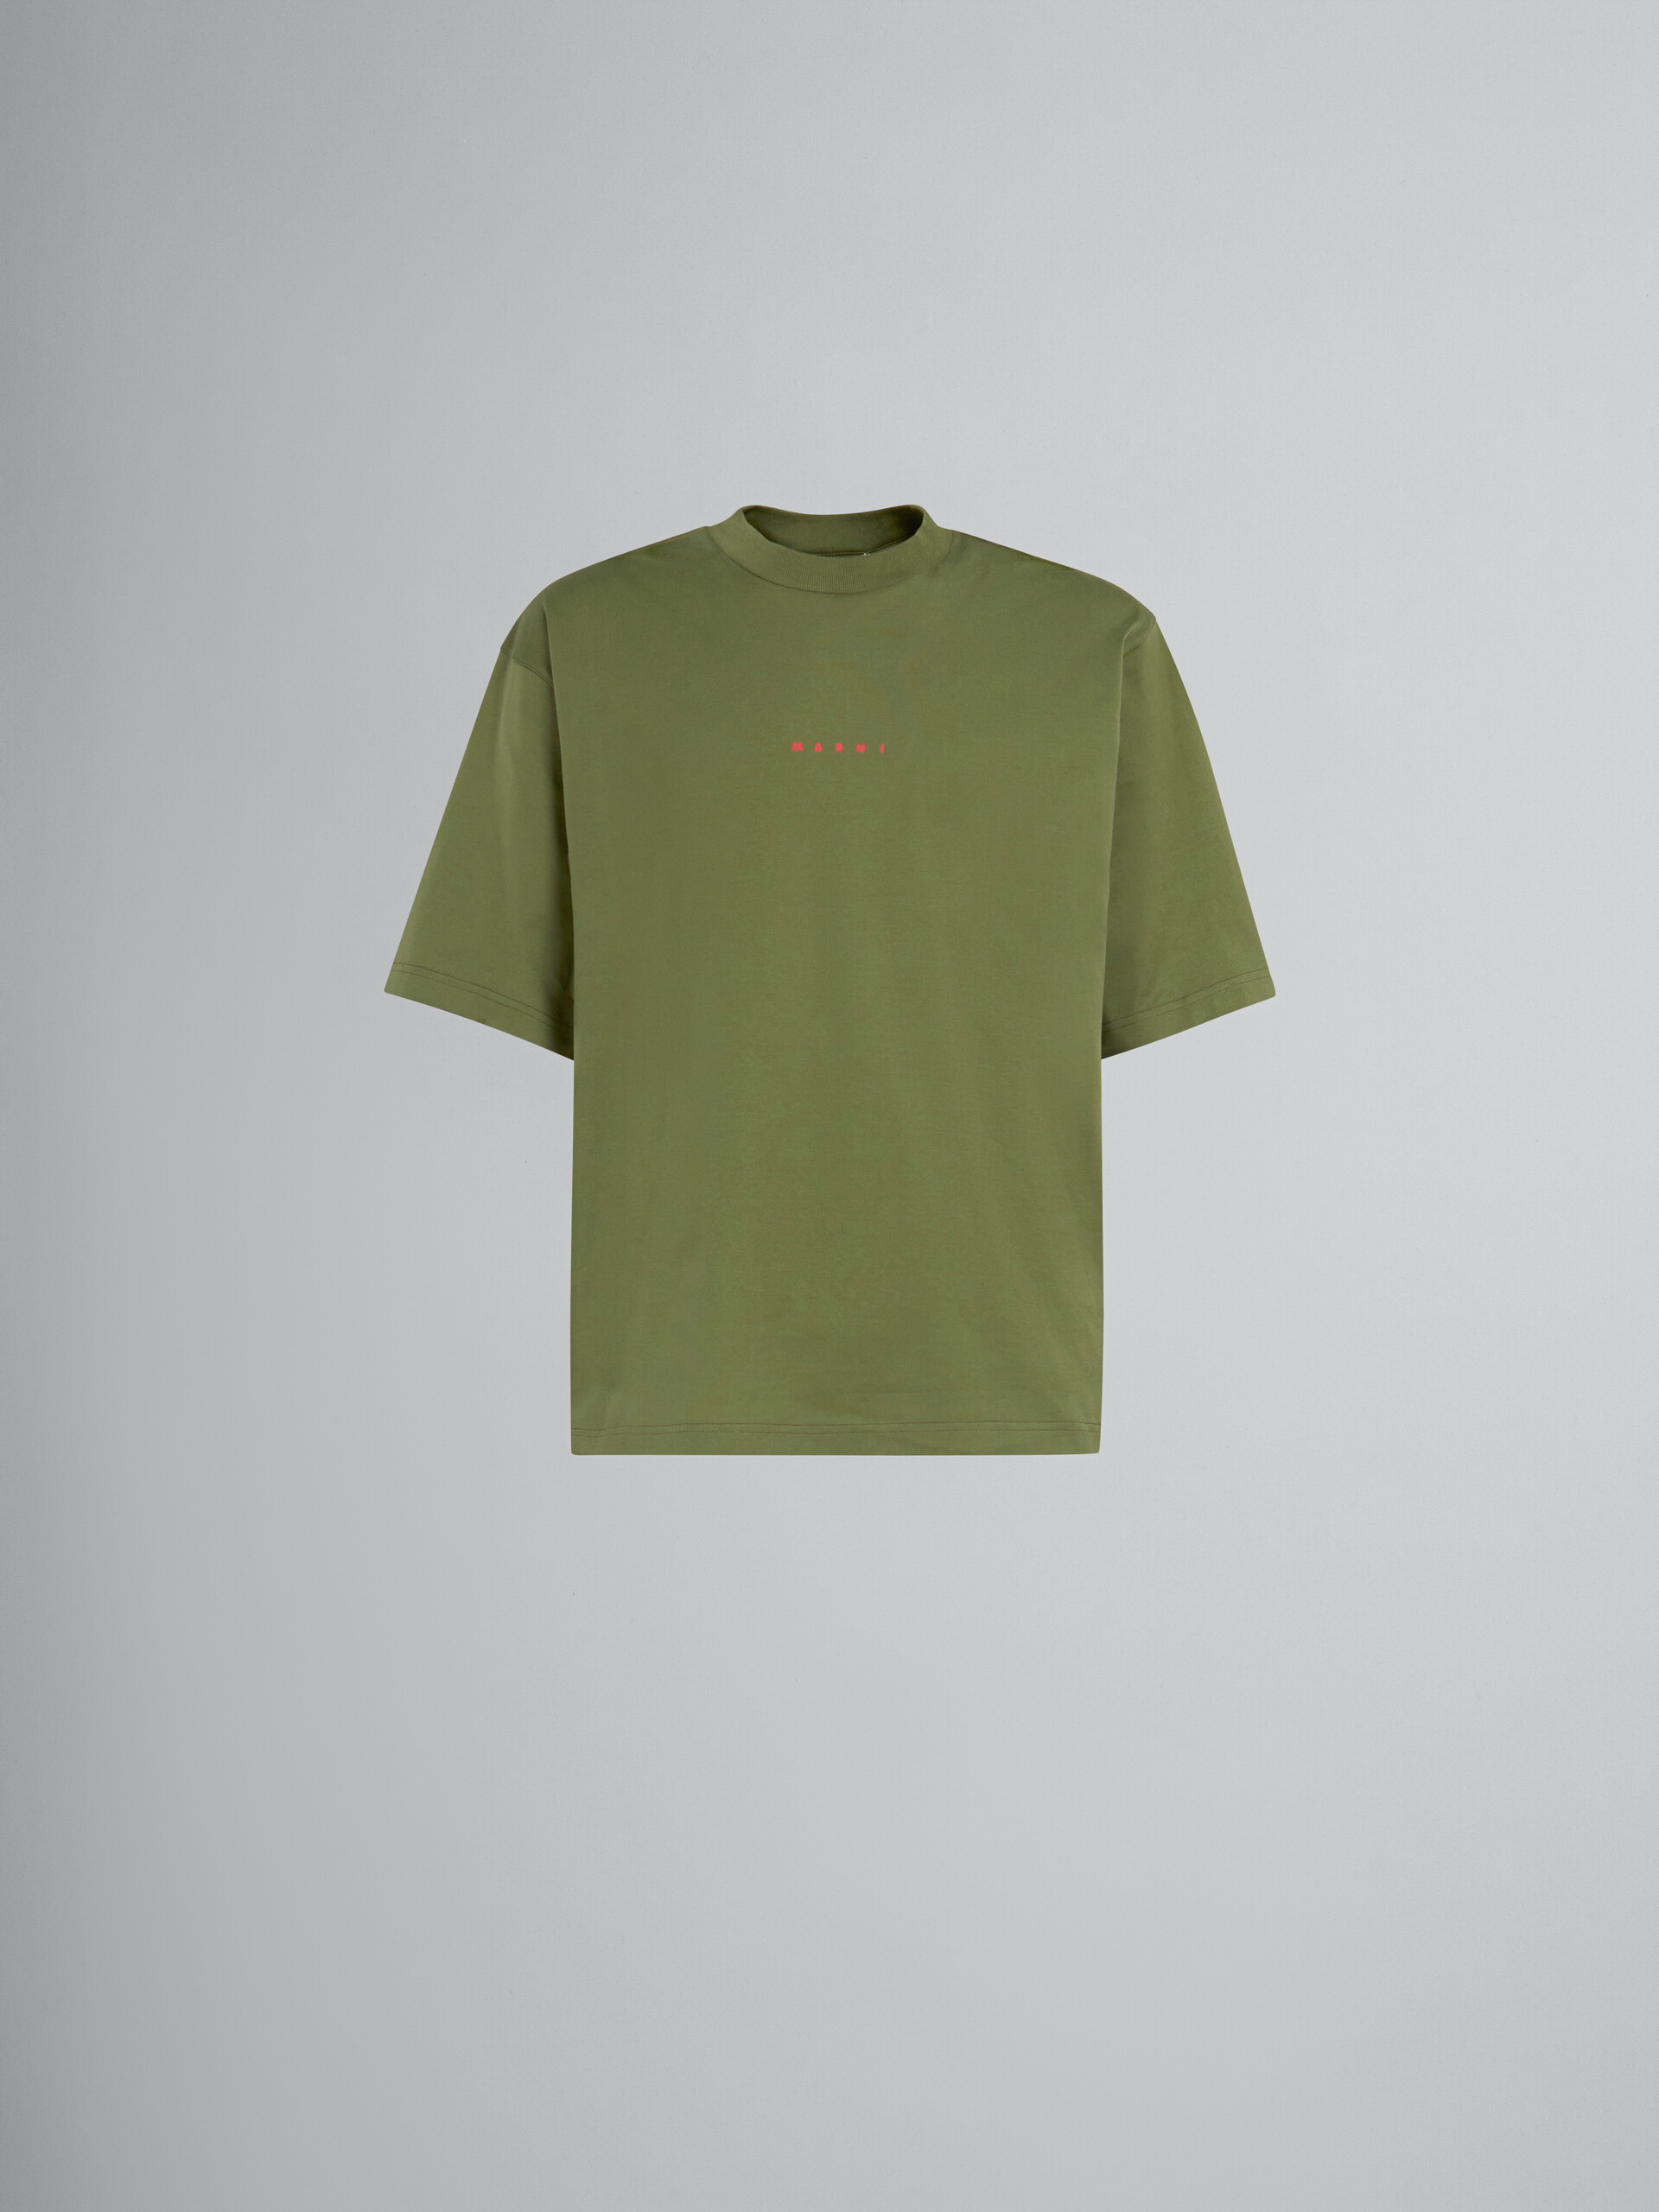 Green organic cotton T-shirt with logo - T-shirts - Image 1